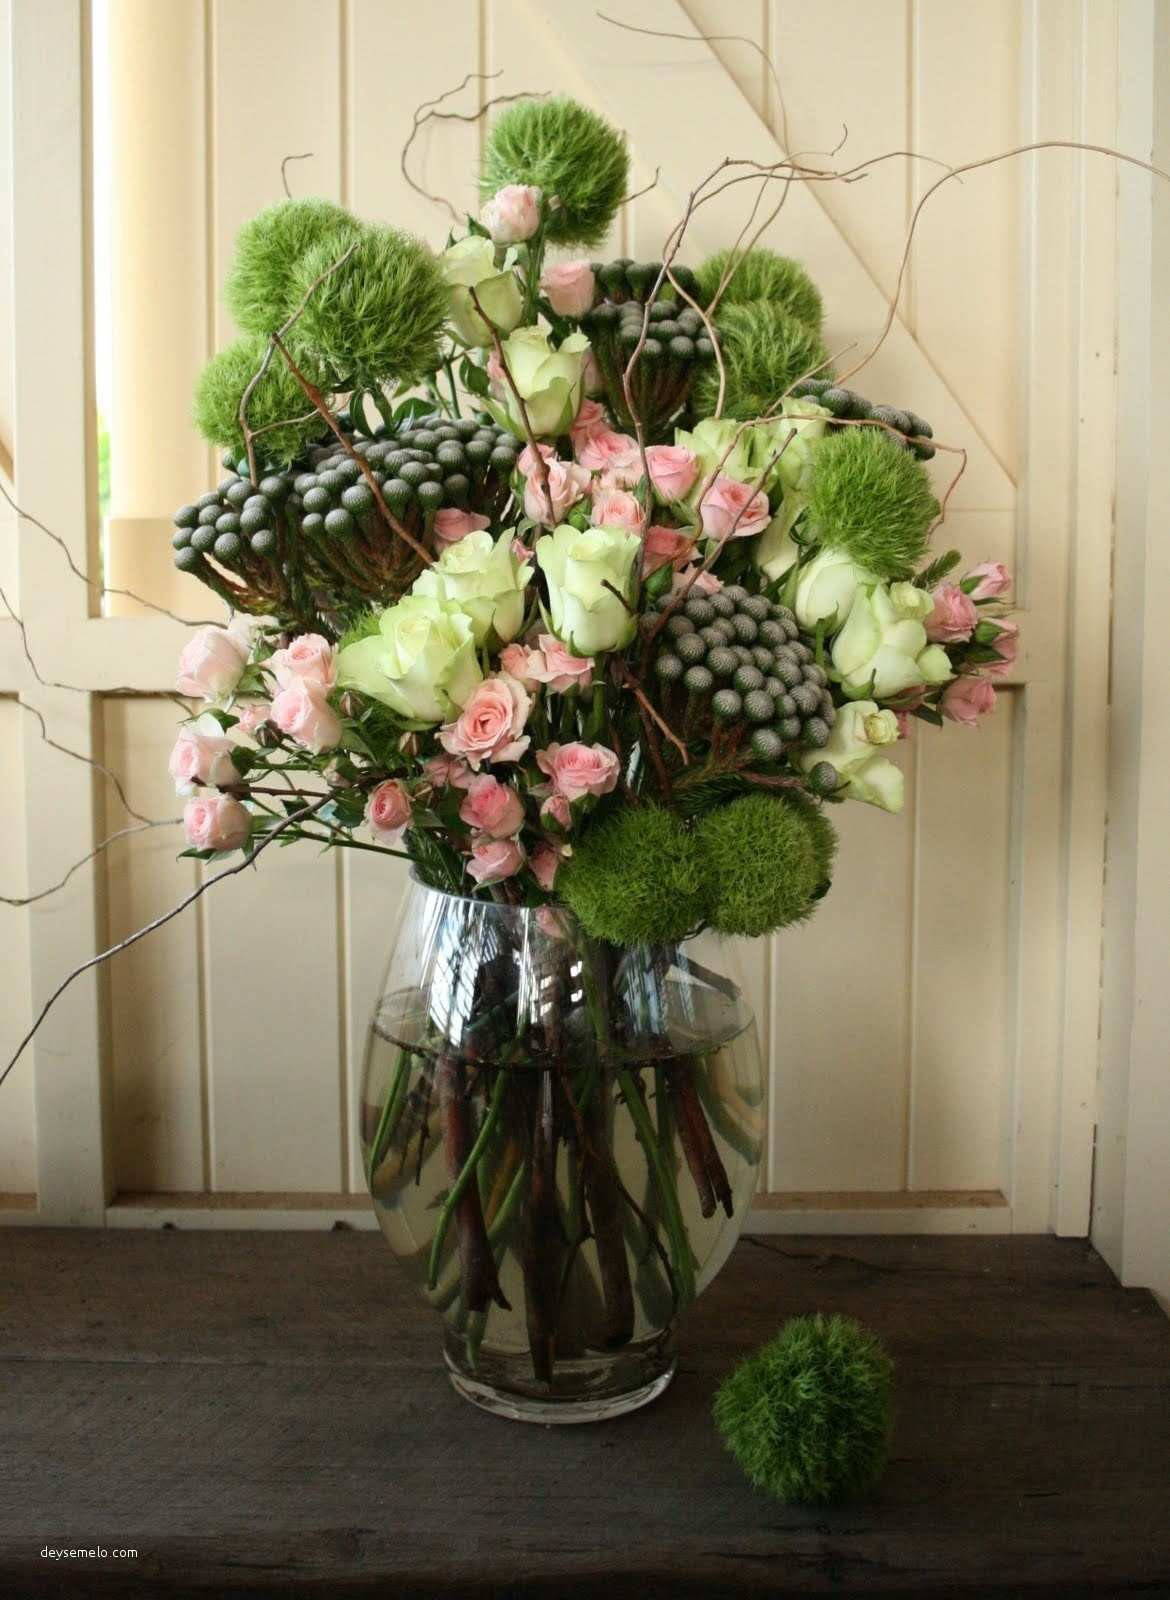 Pretty Flower Vases Of 2018 Bridesmaid Flowers Of Bouquets Flowers Weddings H Vases Vase within 2018 Bridesmaid Flowers Of Bouquets Flowers Weddings H Vases Vase Flower Arrangements I 0d